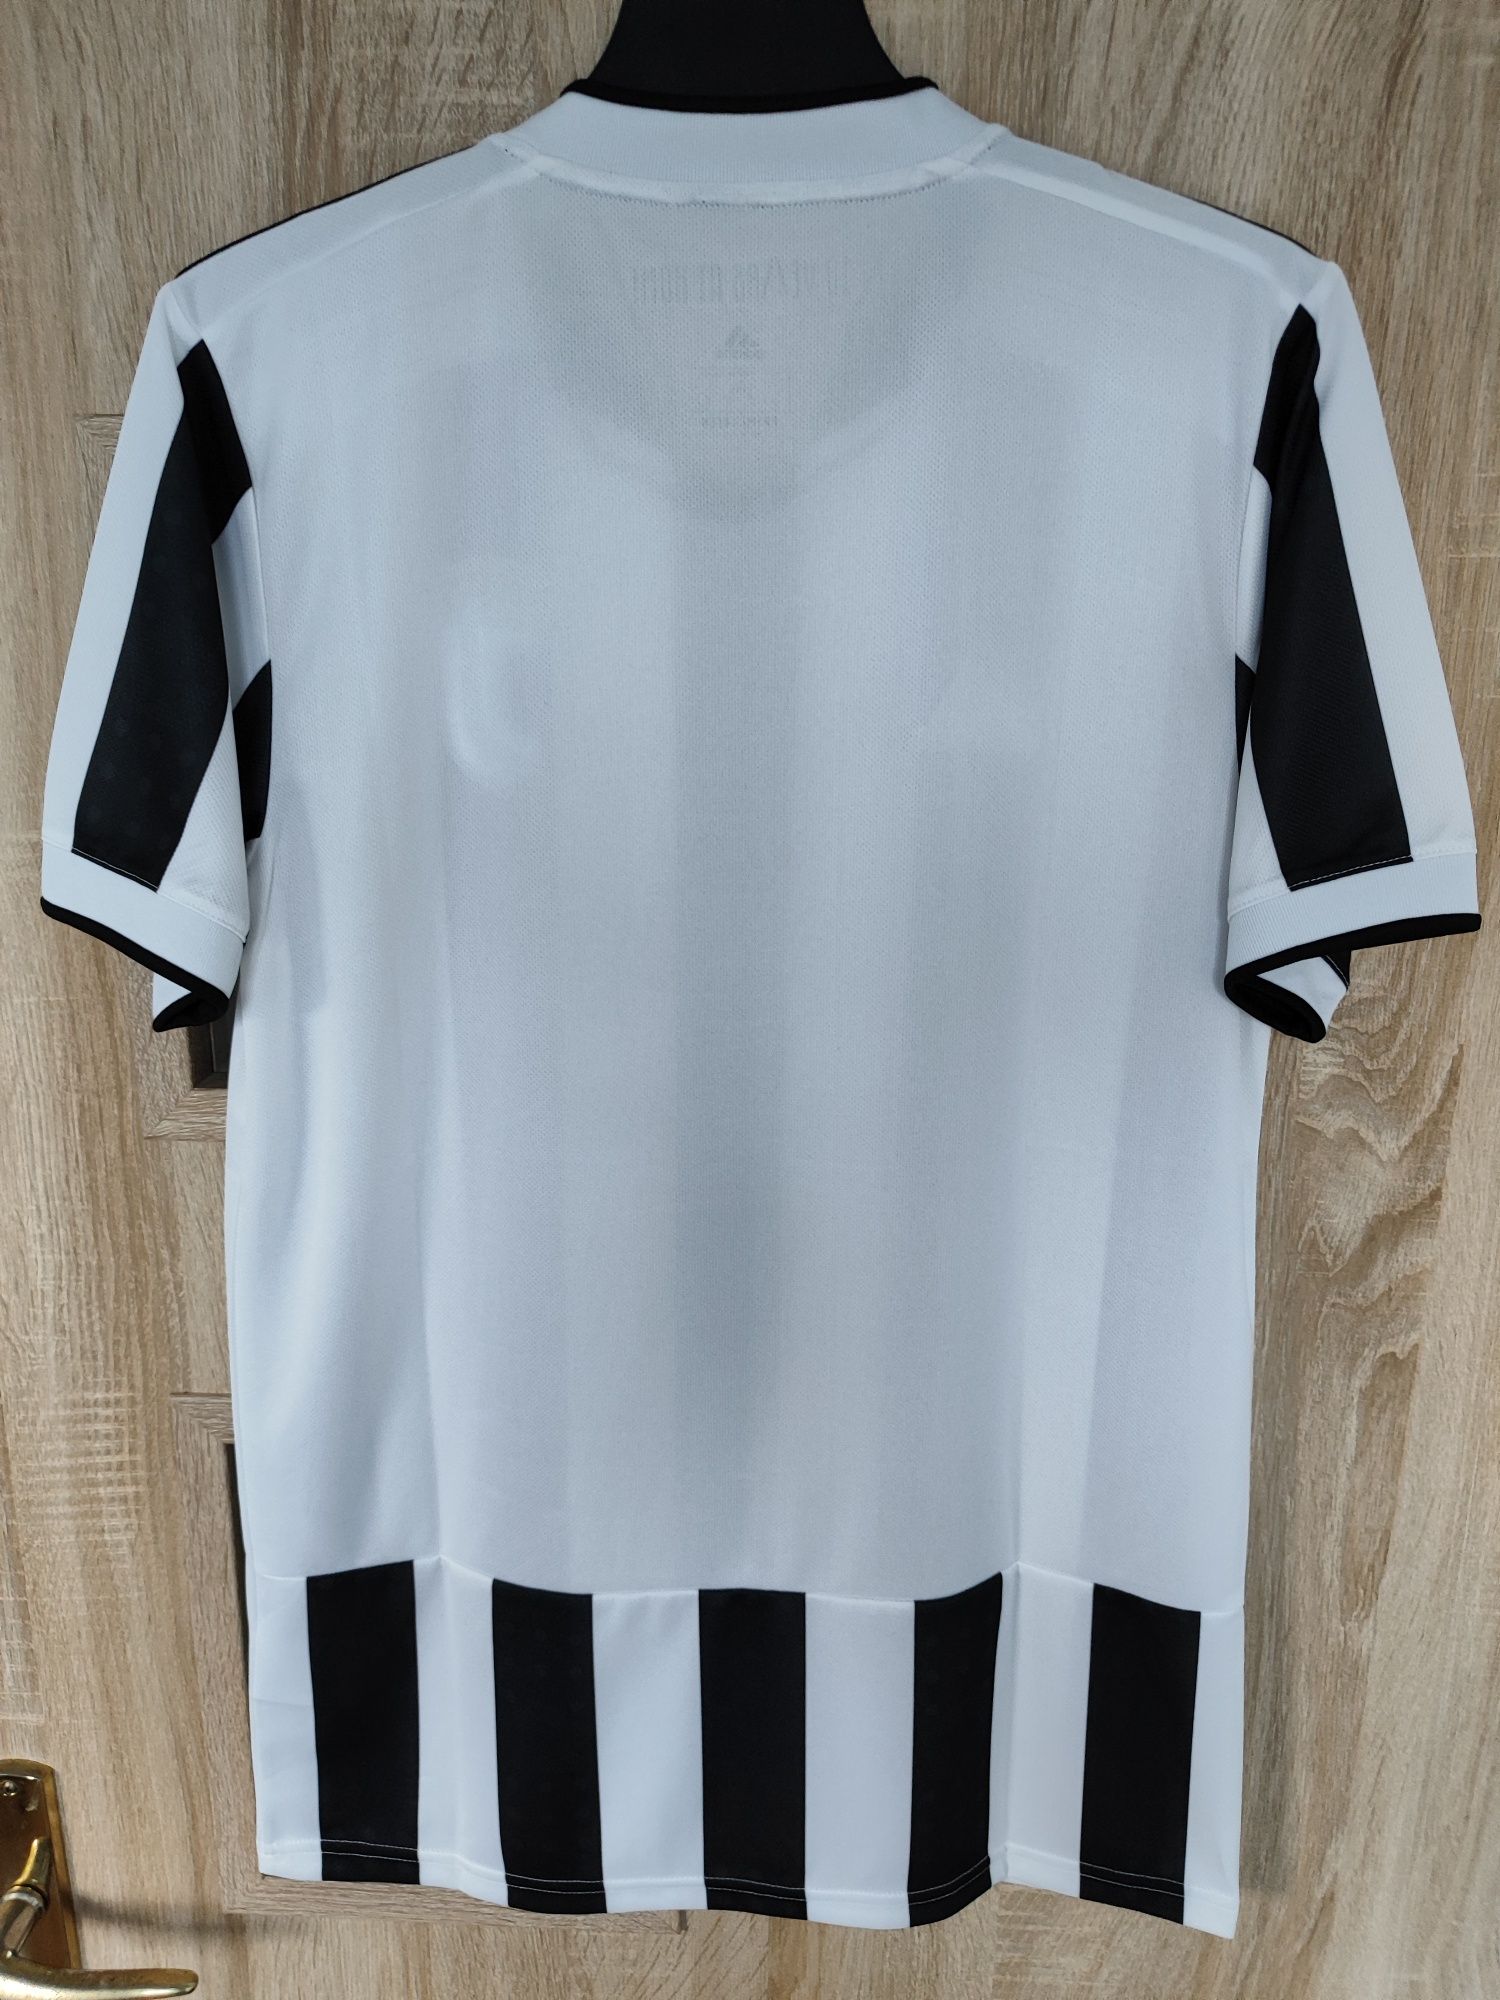 Koszulka piłkarska męska Adidas Juventus FC 2021/22 rozmiar M